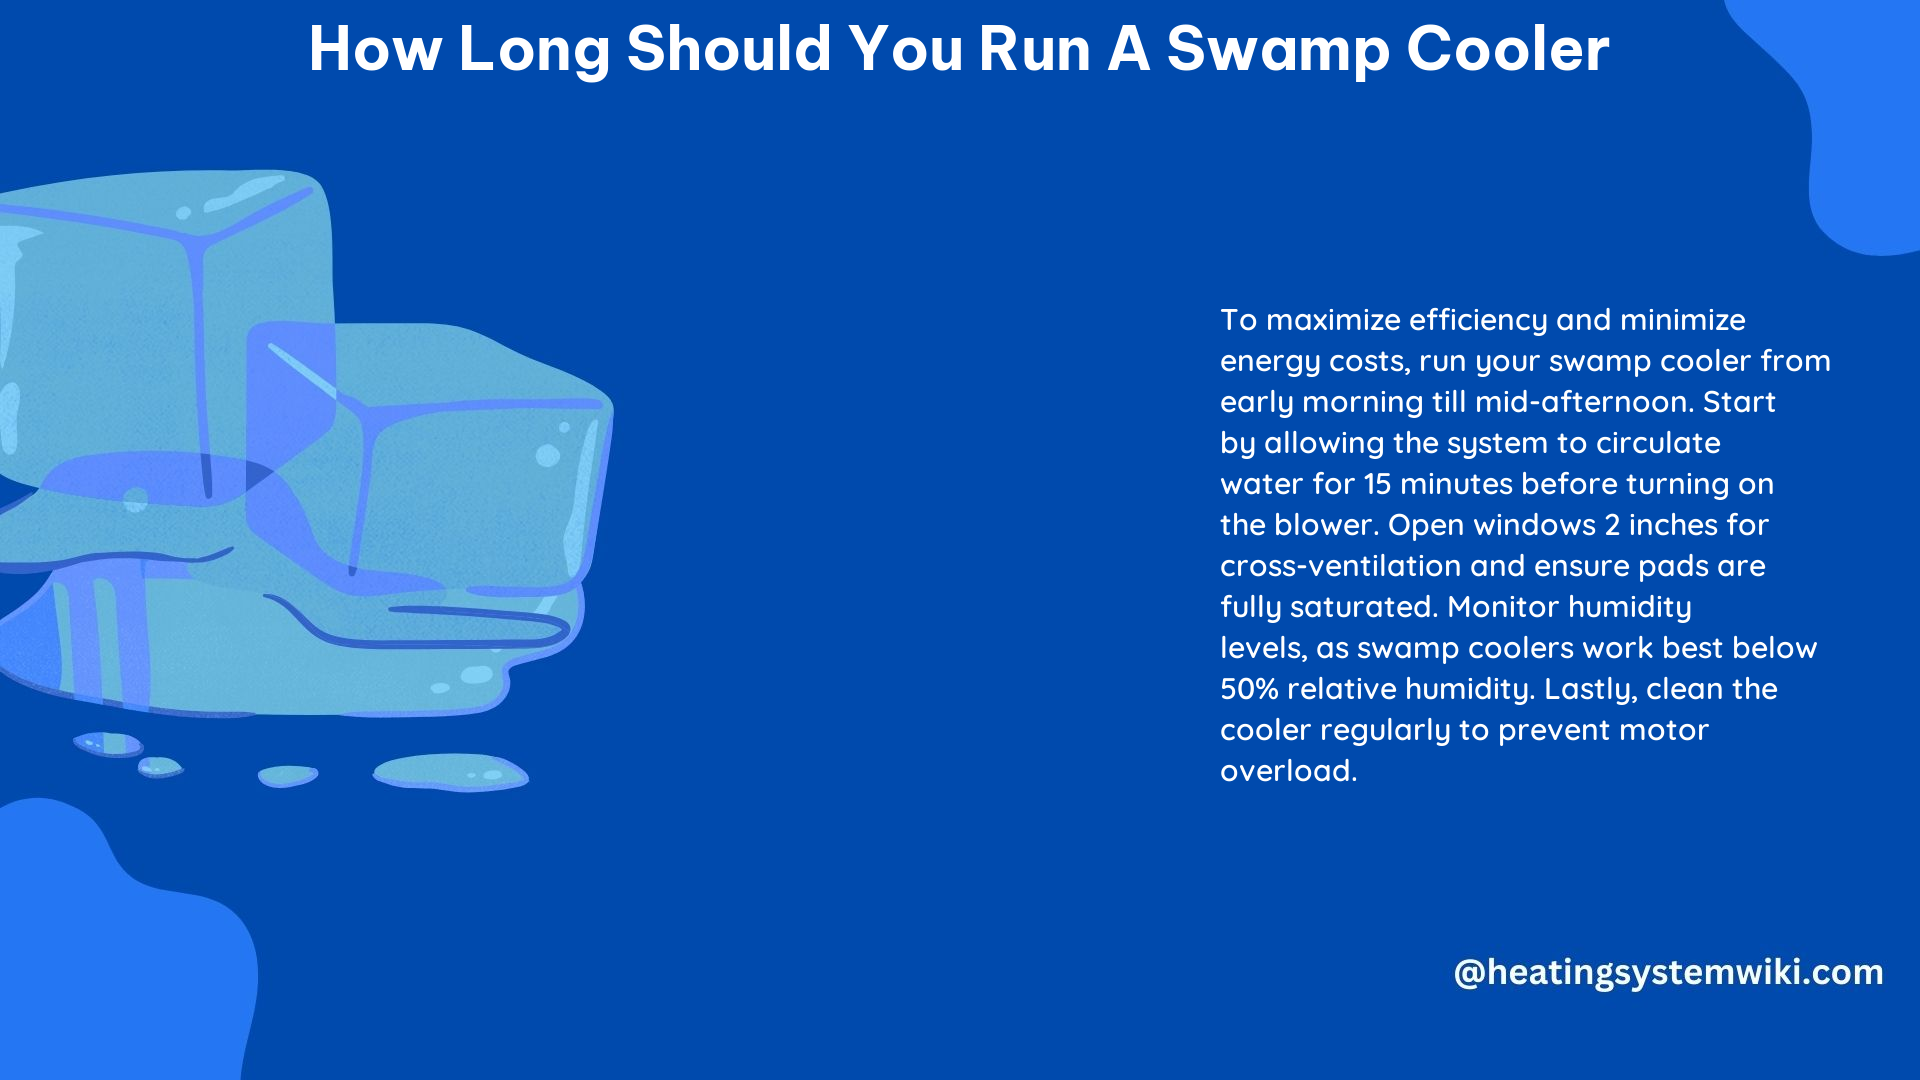 How Long Should You Run a Swamp Cooler